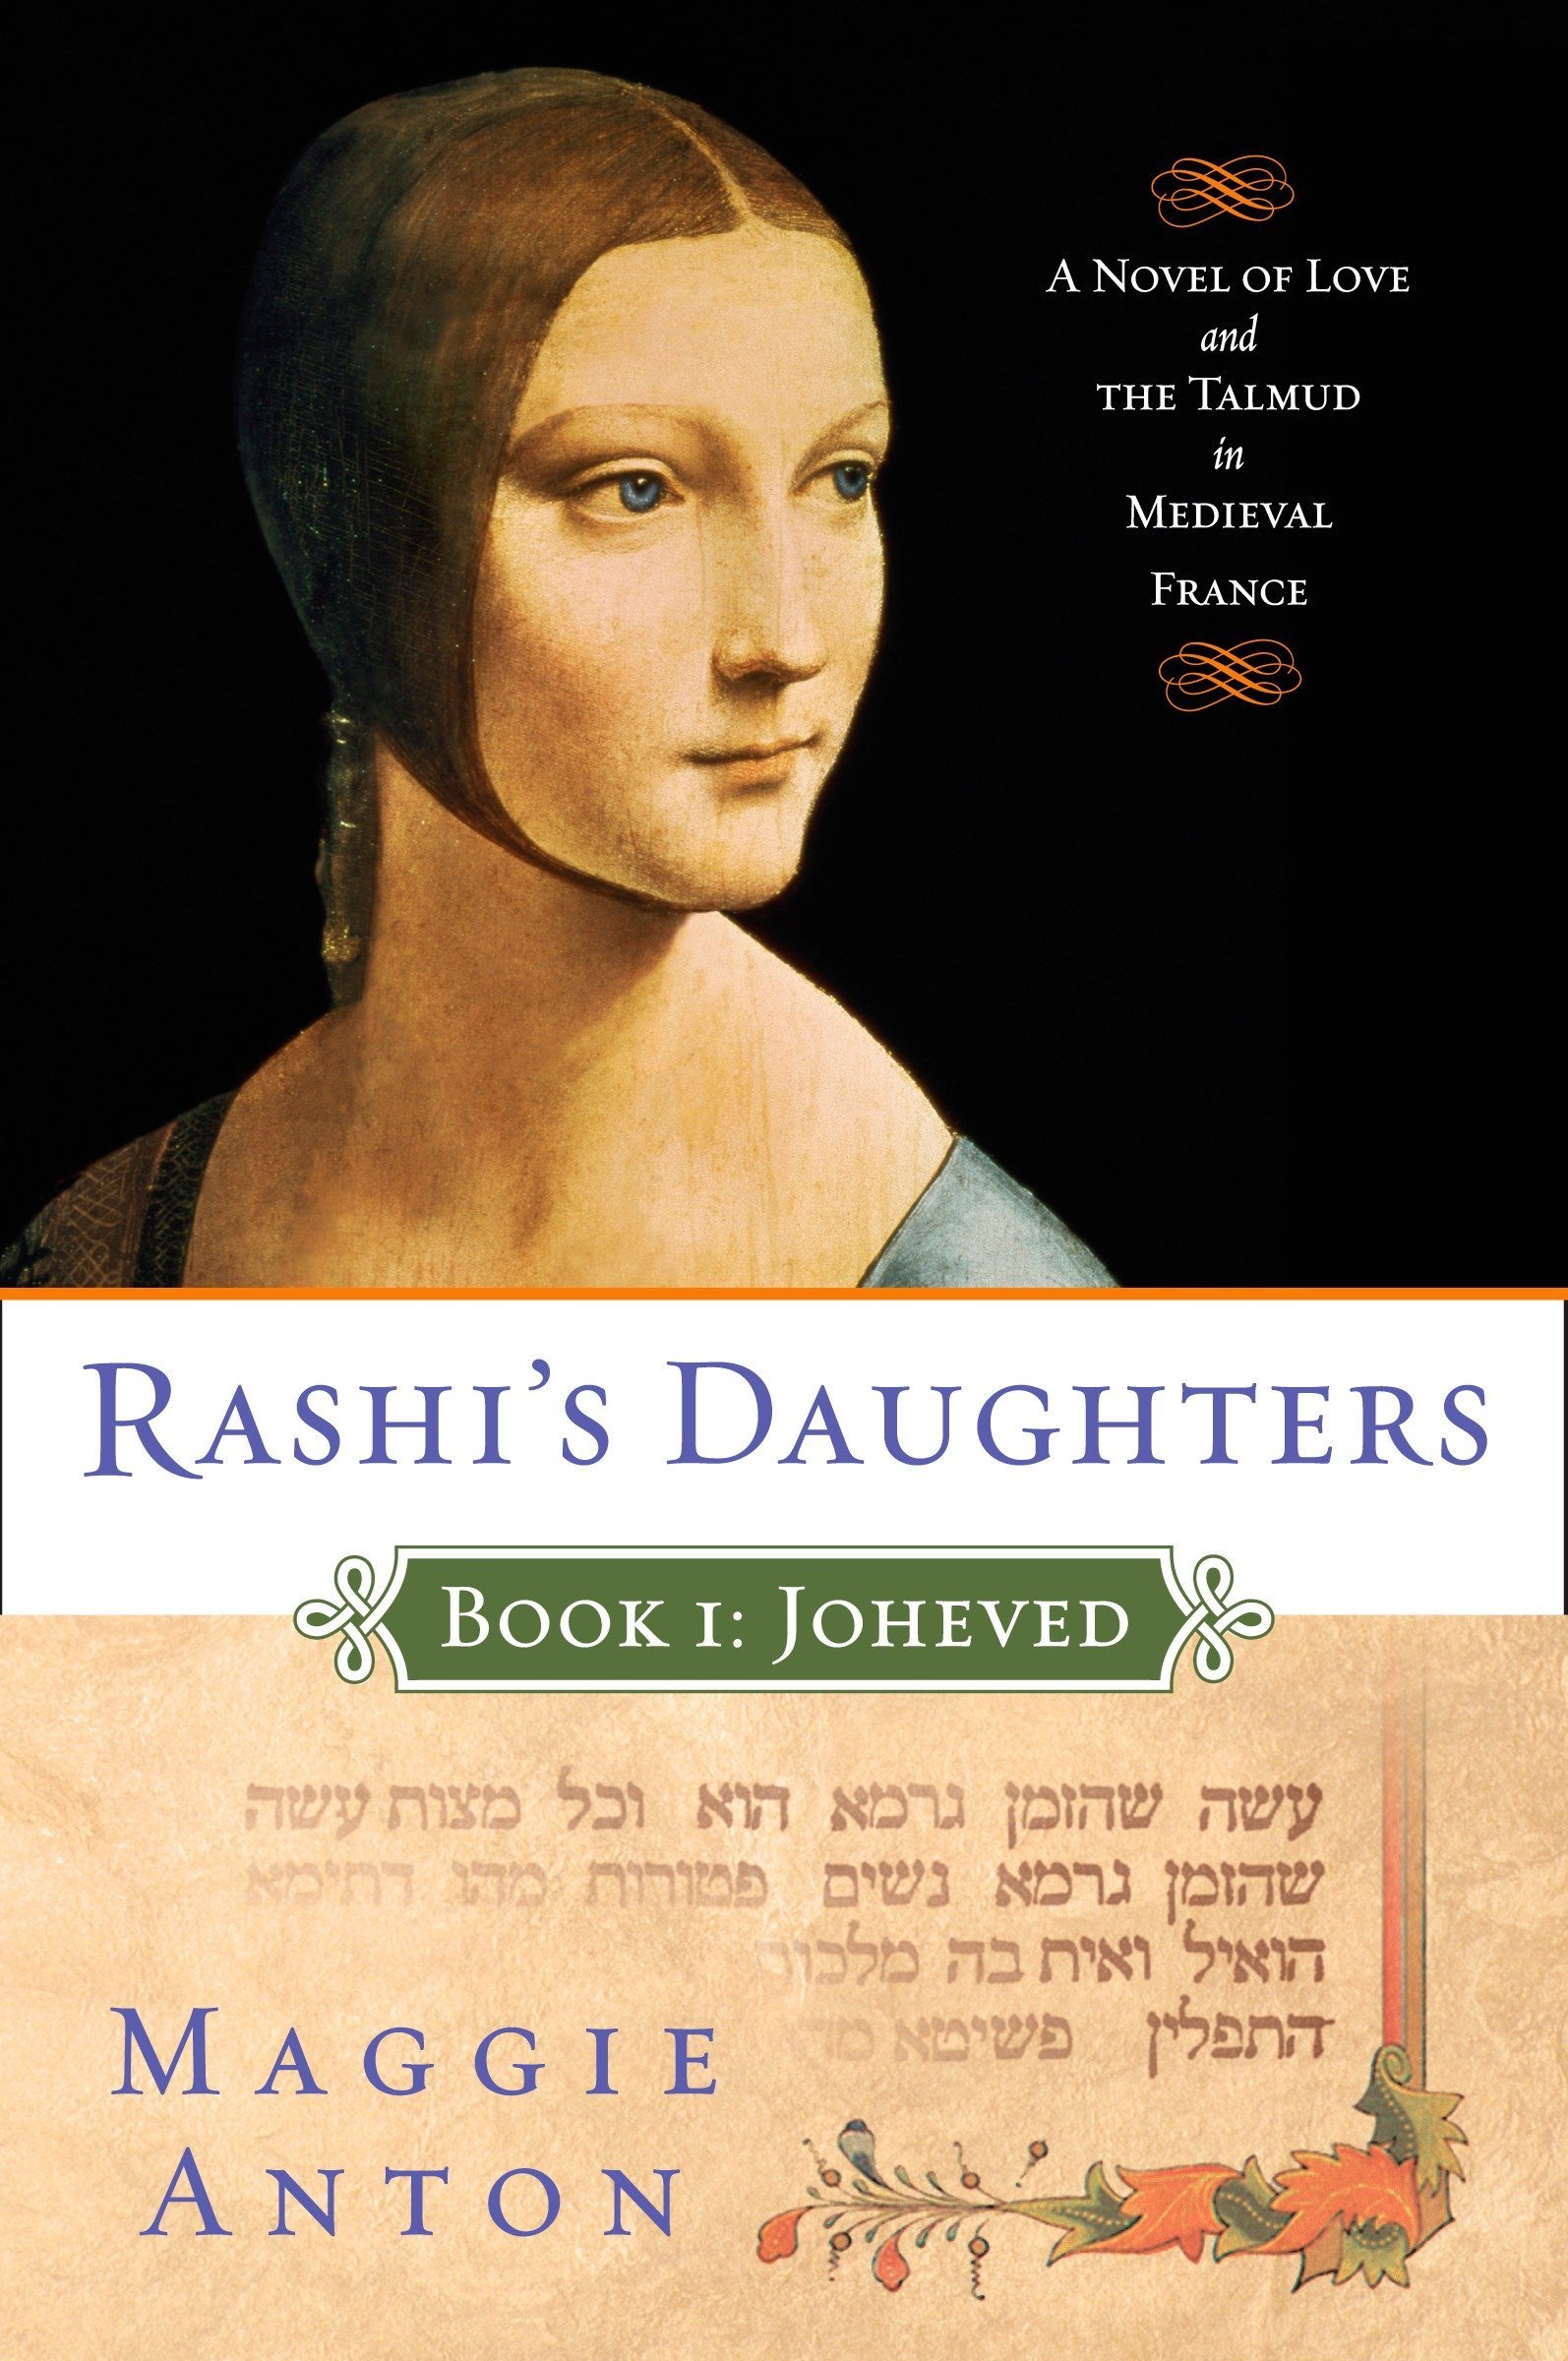 Rashi's daughters